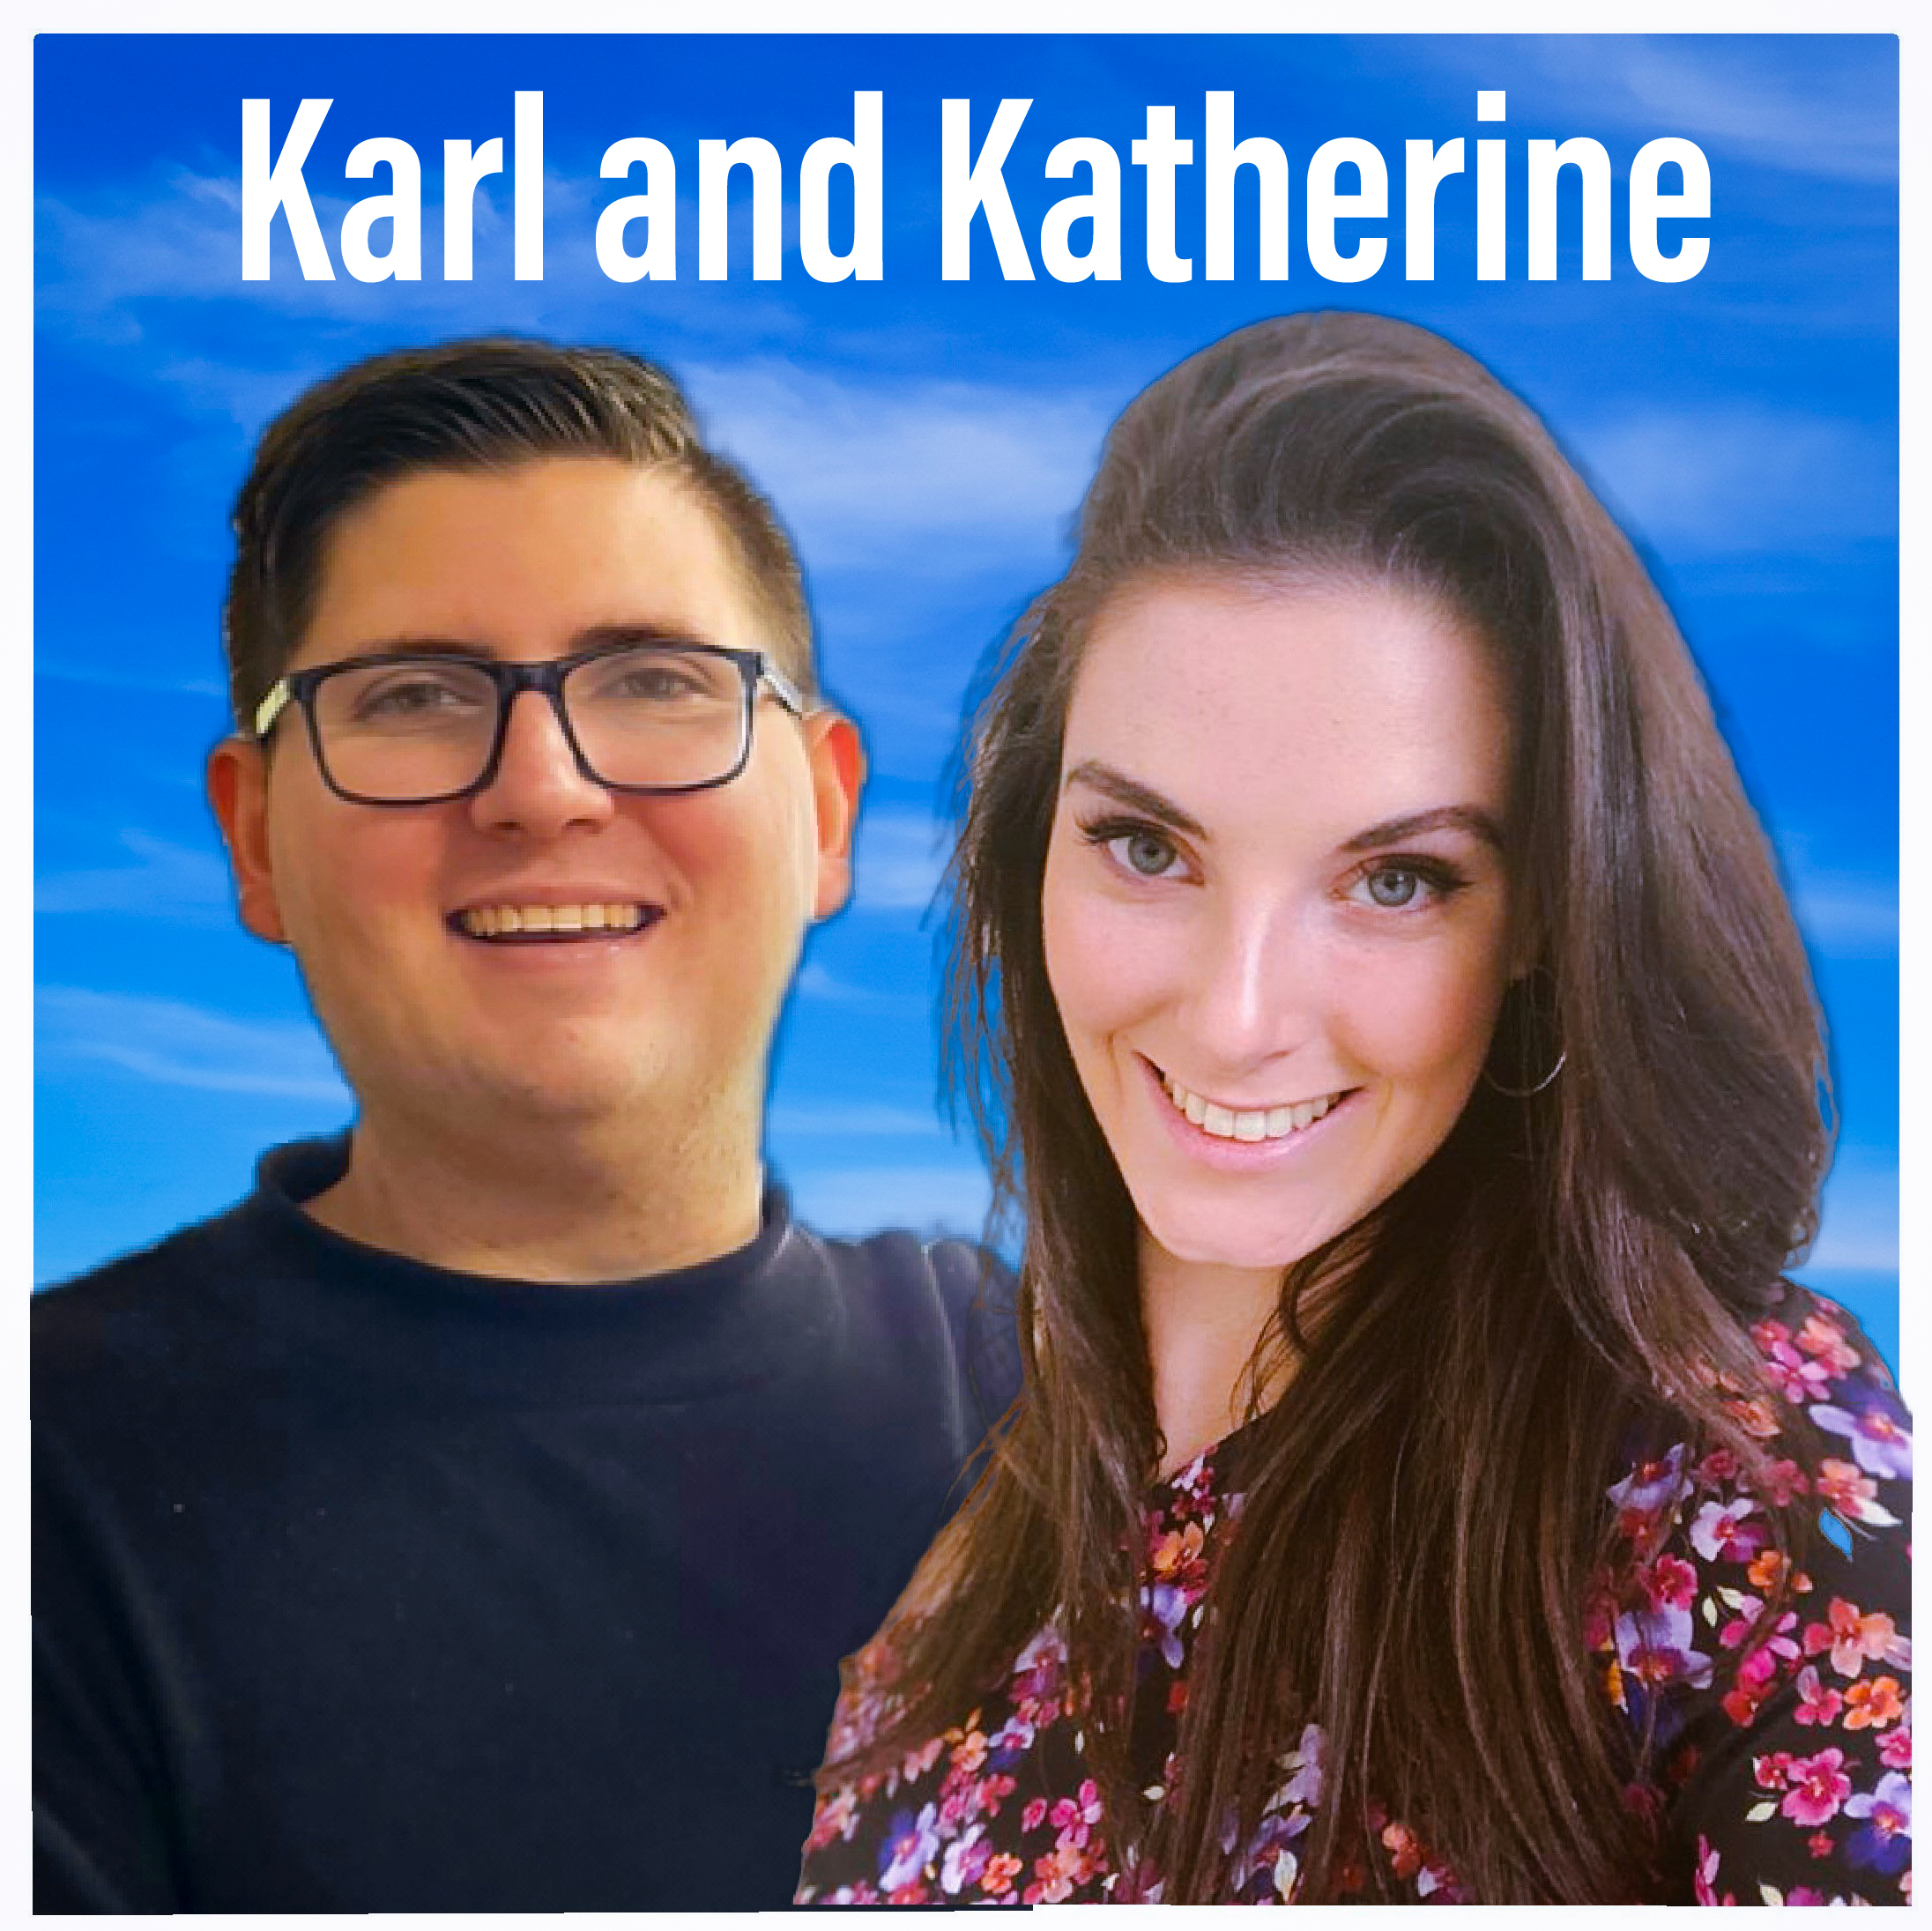 Karl and Katherine - Friday 24th September 2021